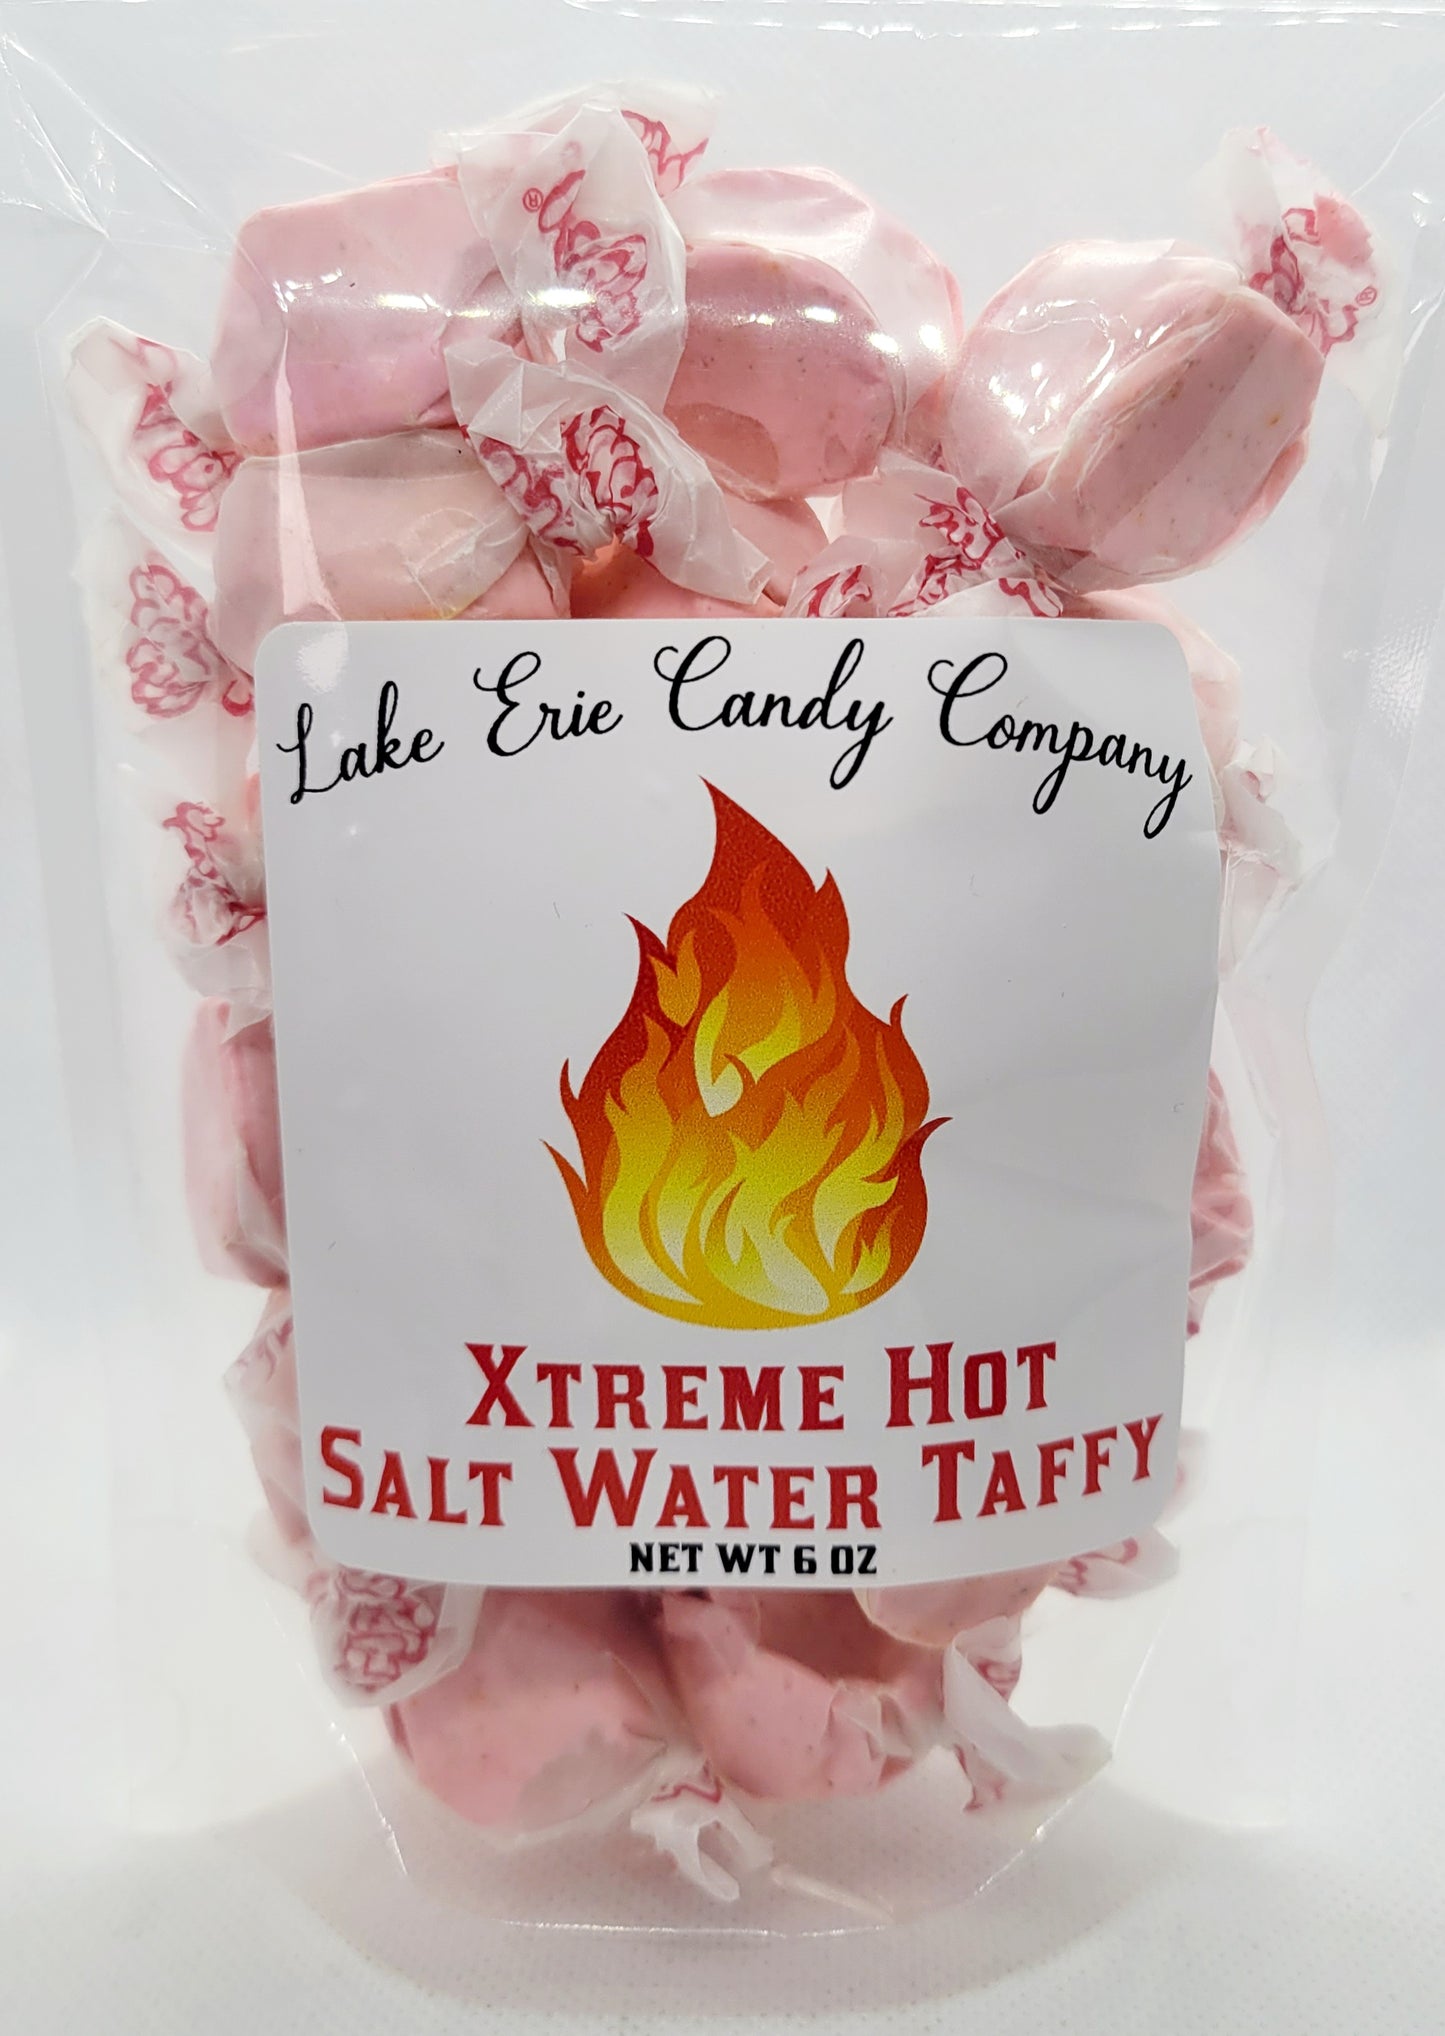 Xtreme Hot Salt Water Taffy